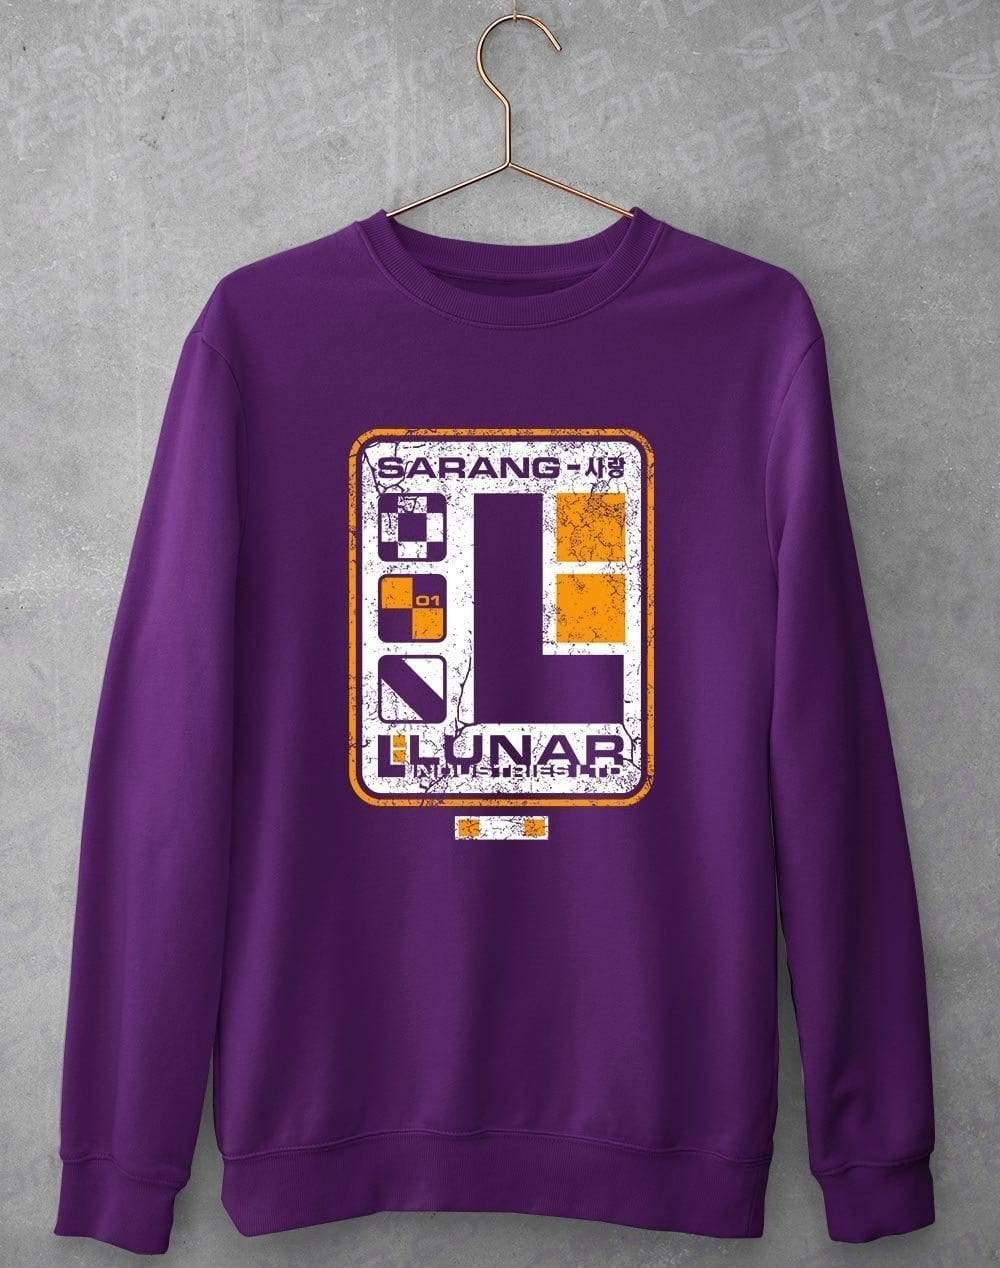 Lunar Industries Sweatshirt S / Purple  - Off World Tees